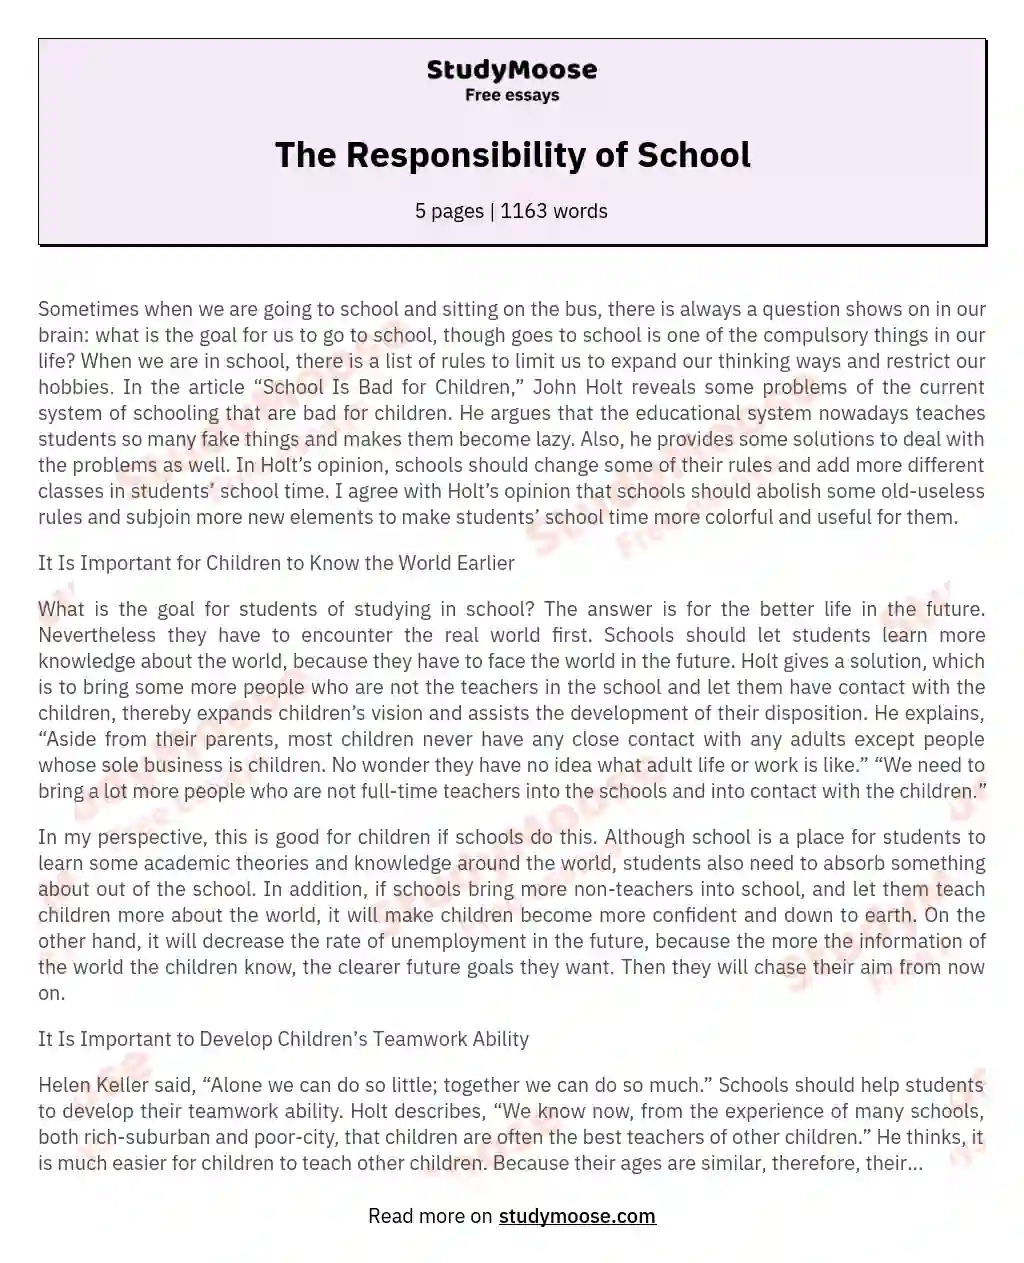 The Responsibility of School essay